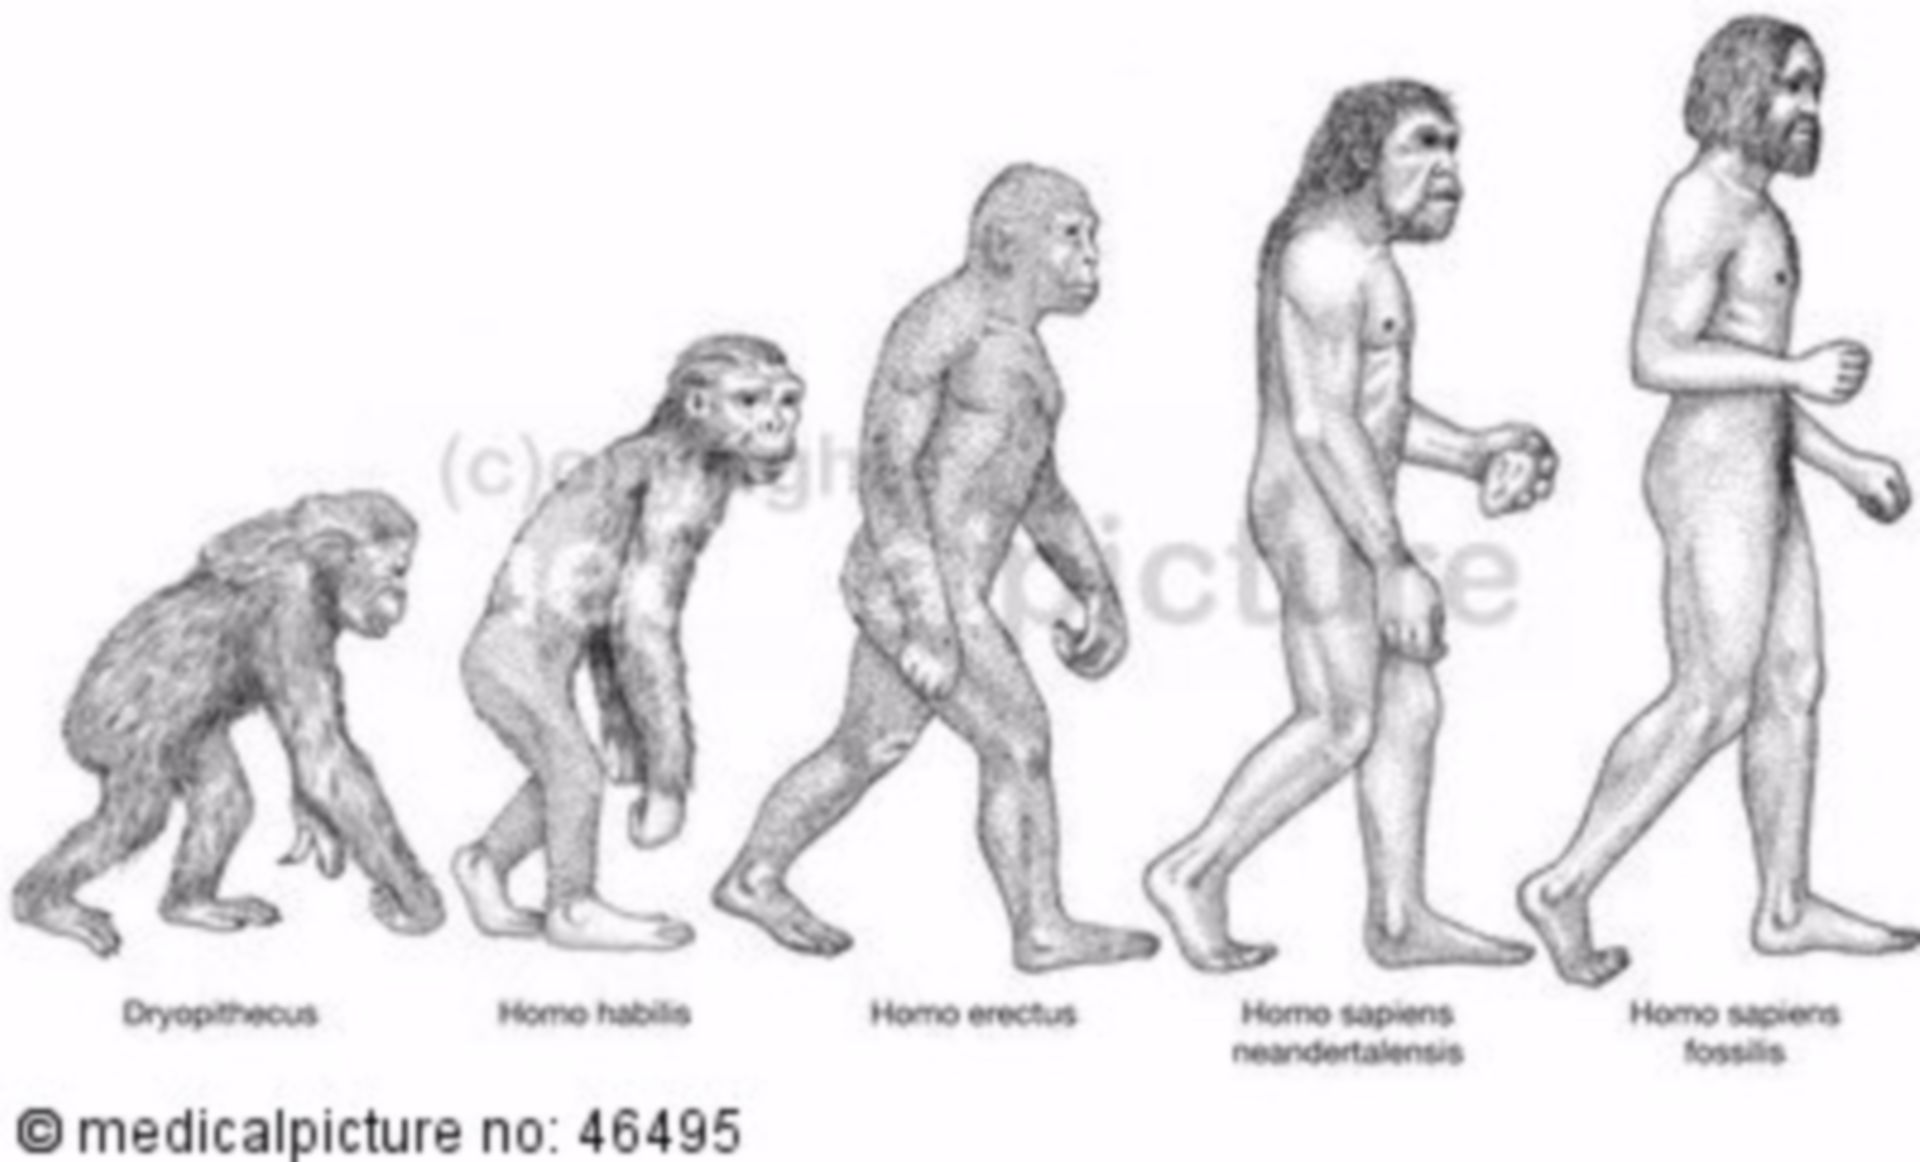  Evolution Verlauf, theory of evolution, development 
